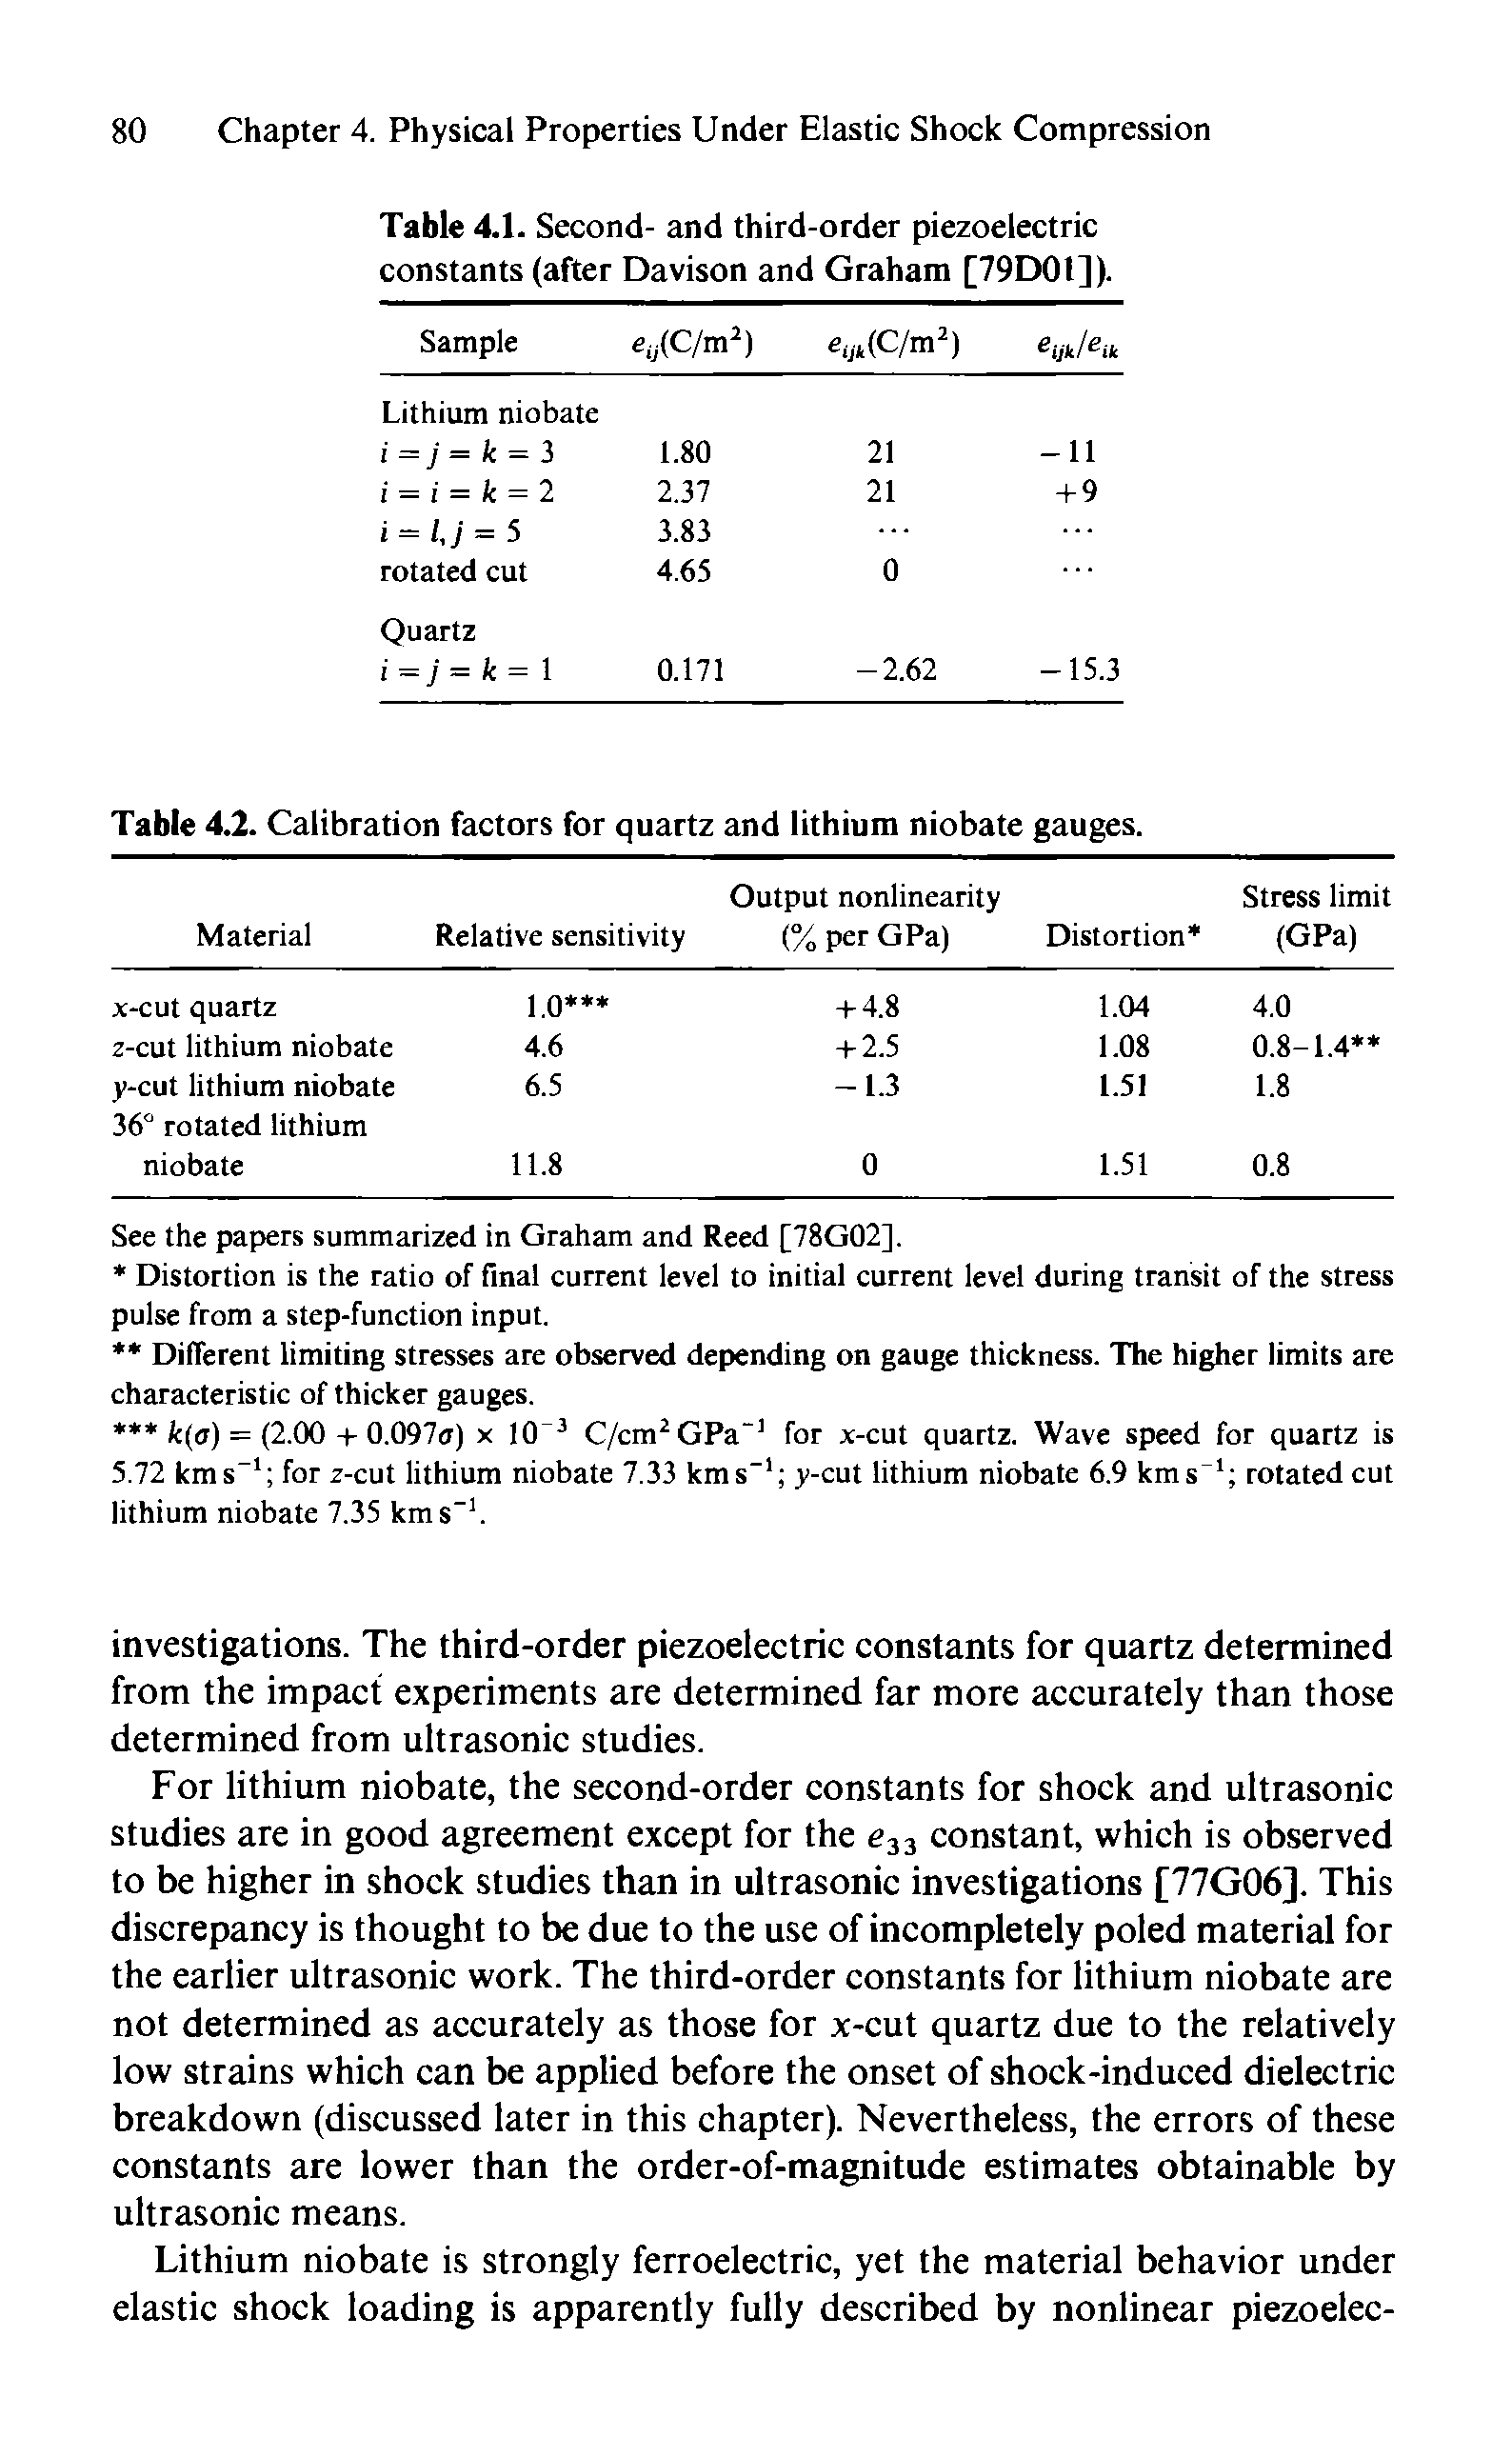 Table 4.2. Calibration factors for quartz and lithium niobate gauges.